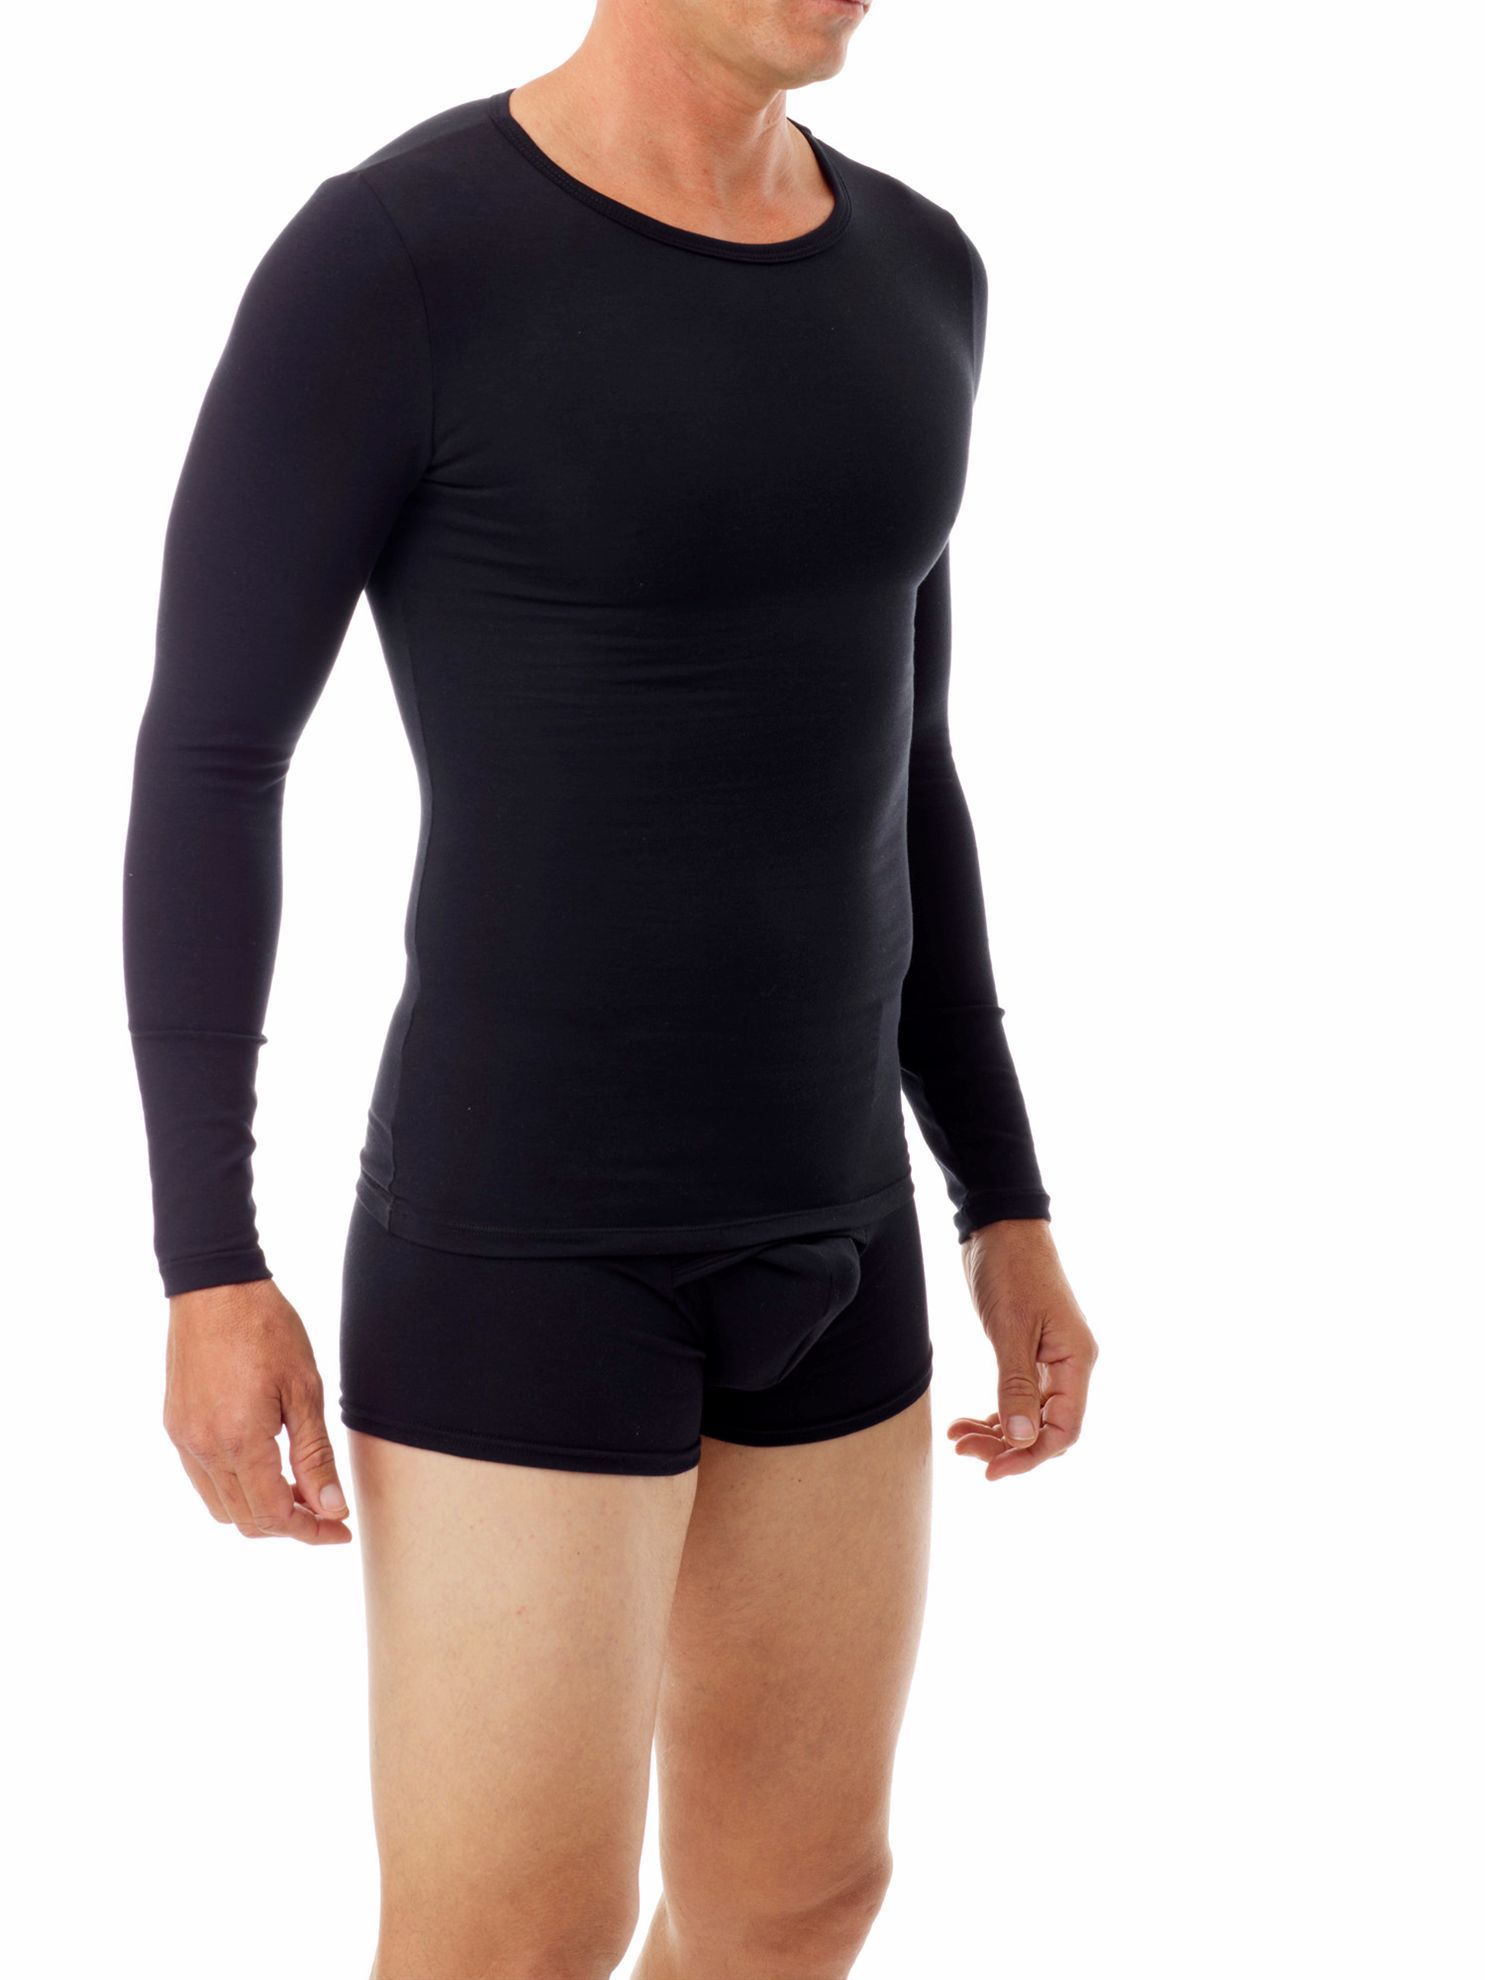 Underworks Cotton Spandex Ultra Light Compression Muscle Shirt - Black - XS